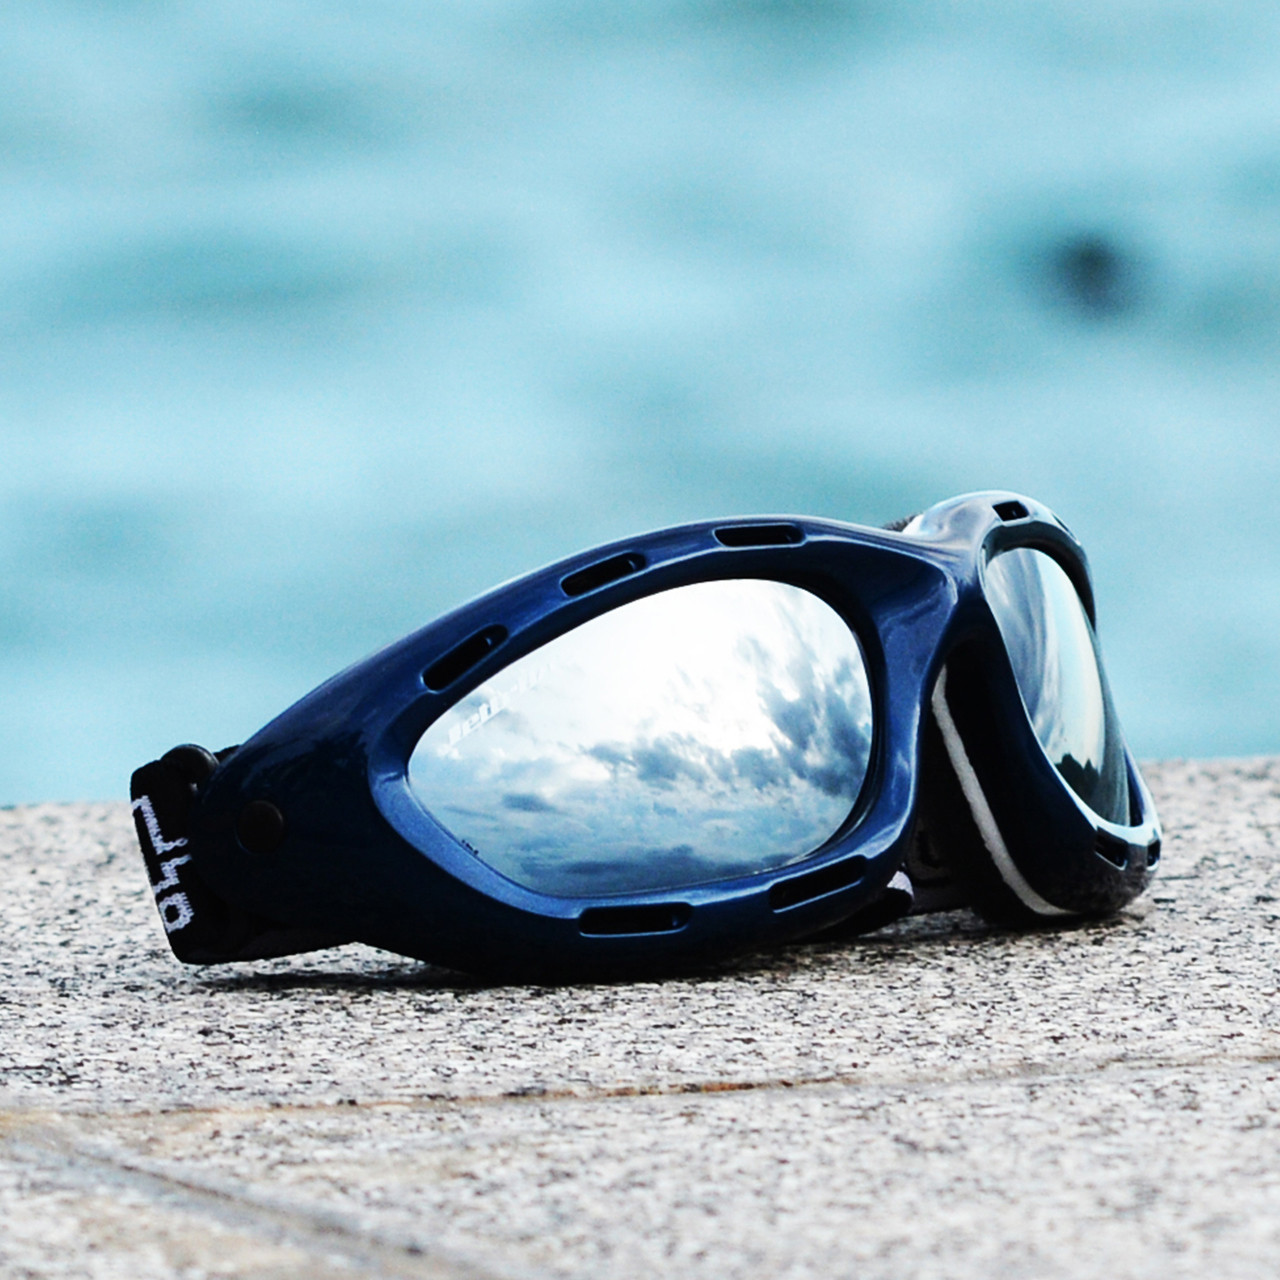 Floating Polarized Wave Sunglasses 448717 - Personal watercraft